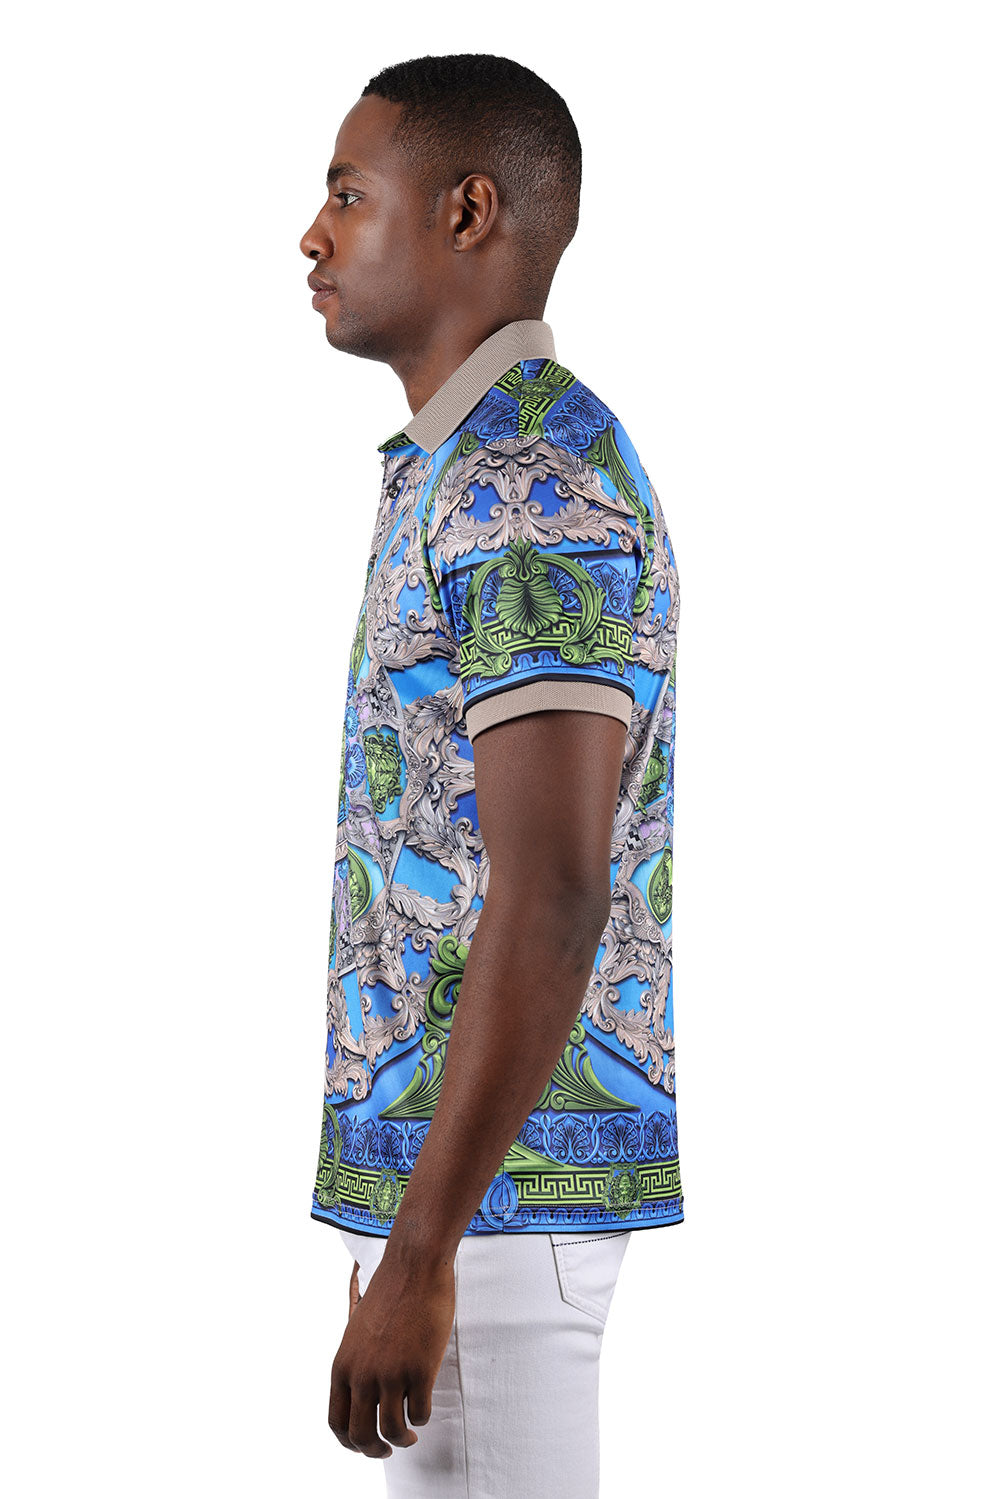 Barabas Men's Floral Medusa Graphic Tee Polo Shirts 3PSP16 Royal